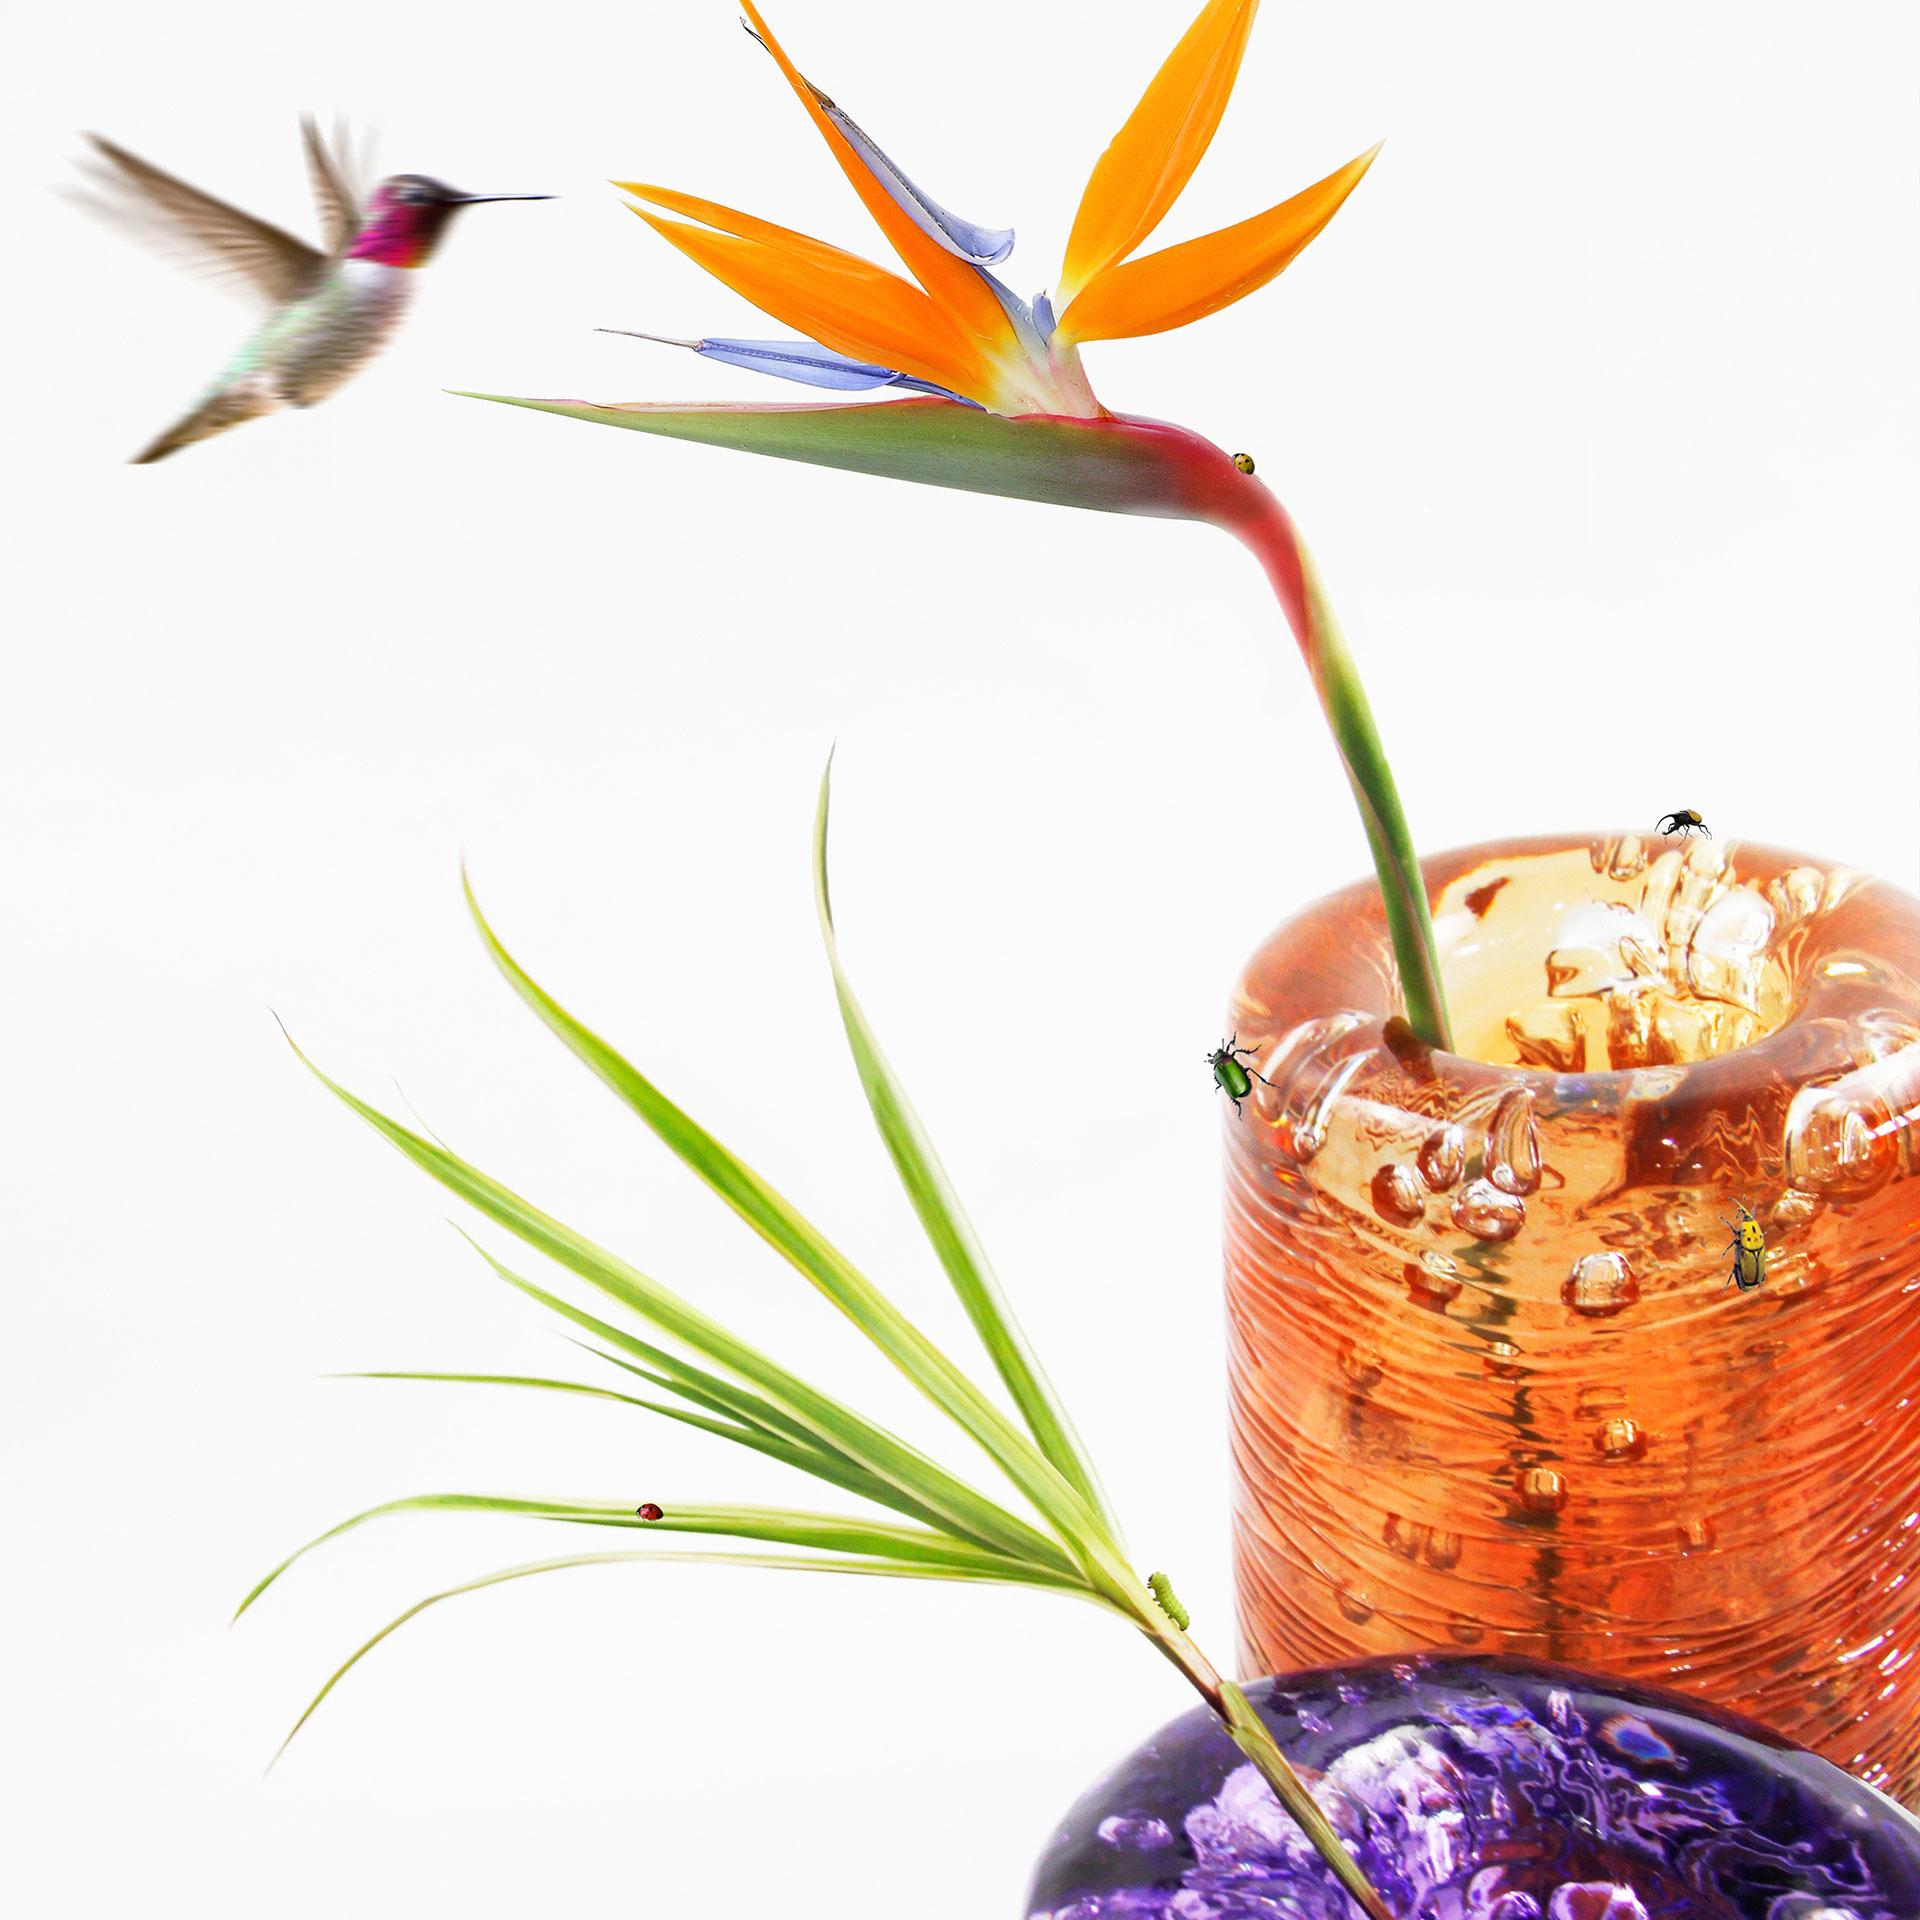 Modern Jungle Contemporary Vase, Small Bicolor Violet and Green by Jacopo Foggini For Sale